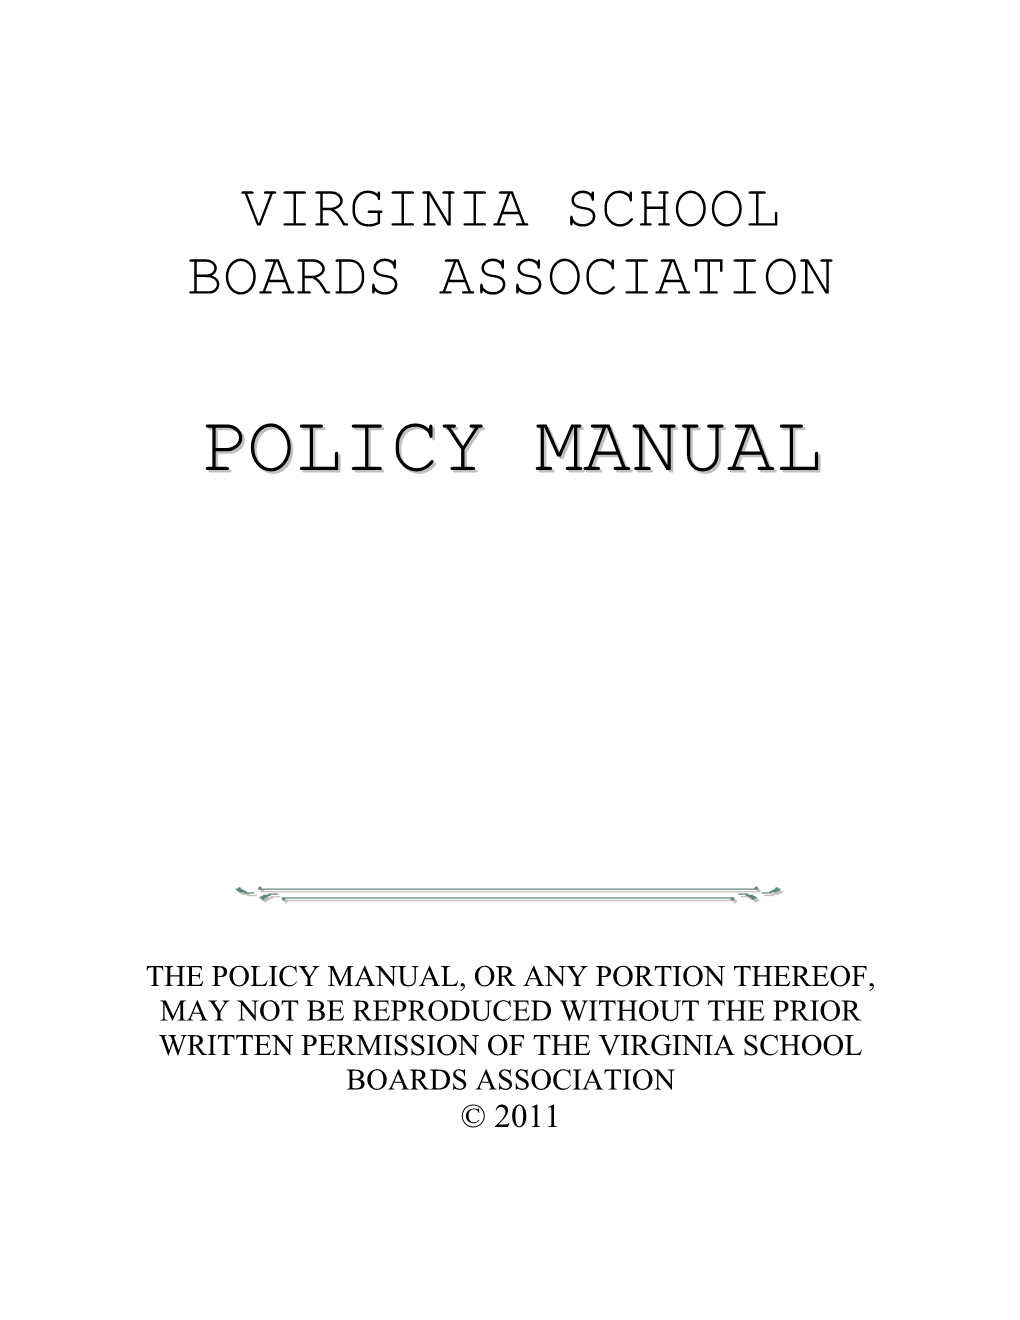 Virginia School Boards Association